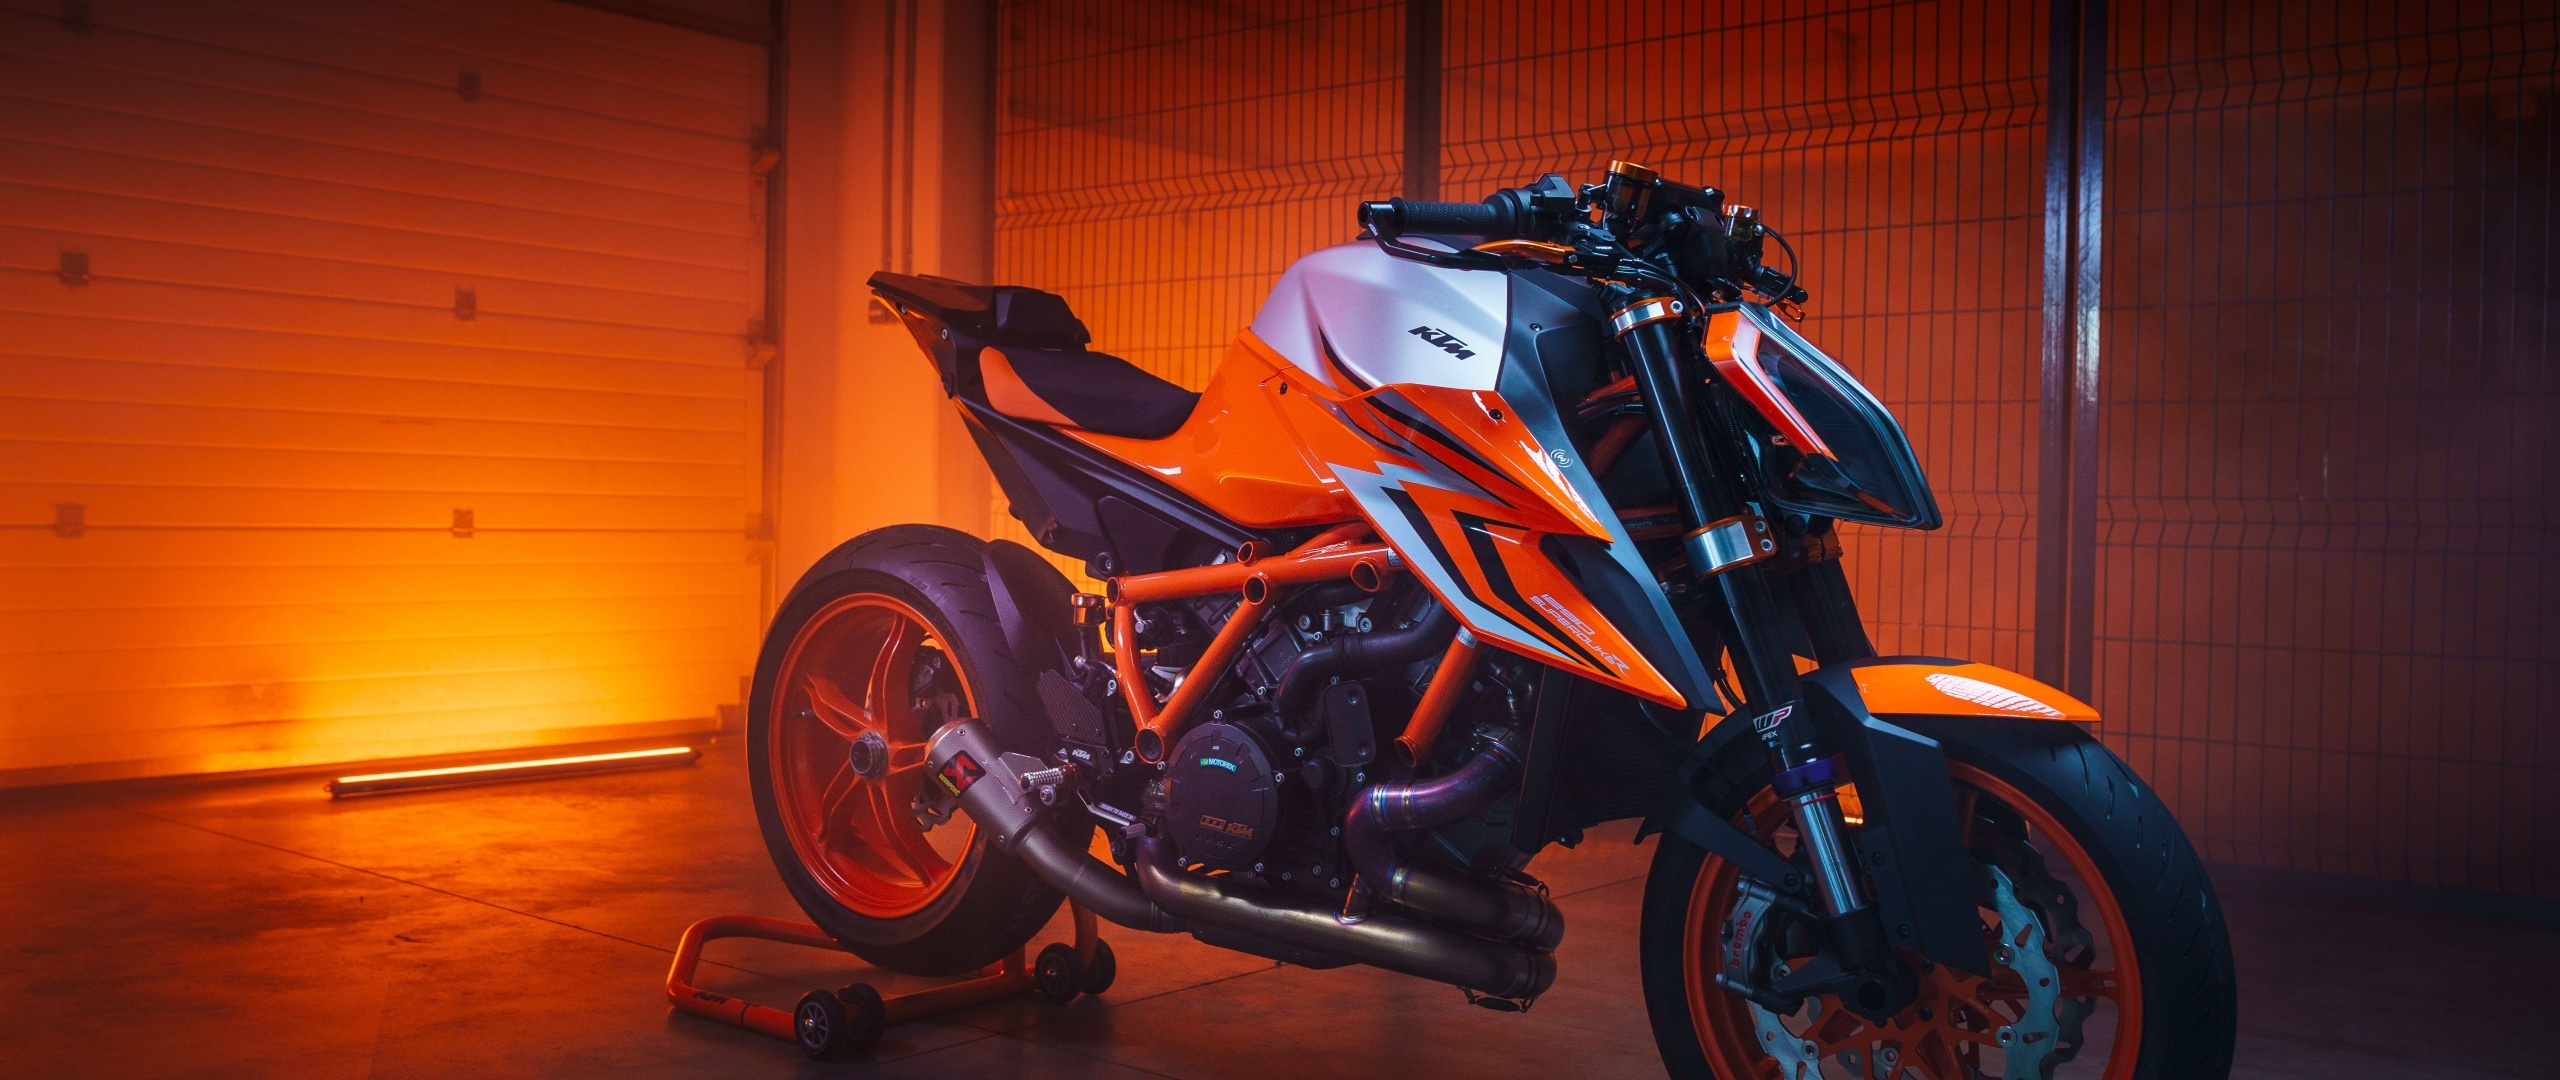 KTM Duke Bike, Super Duke R Evo, Ultimate Bike Wallpaper, Thrilling Motorcycle, 2560x1080 Dual Screen Desktop